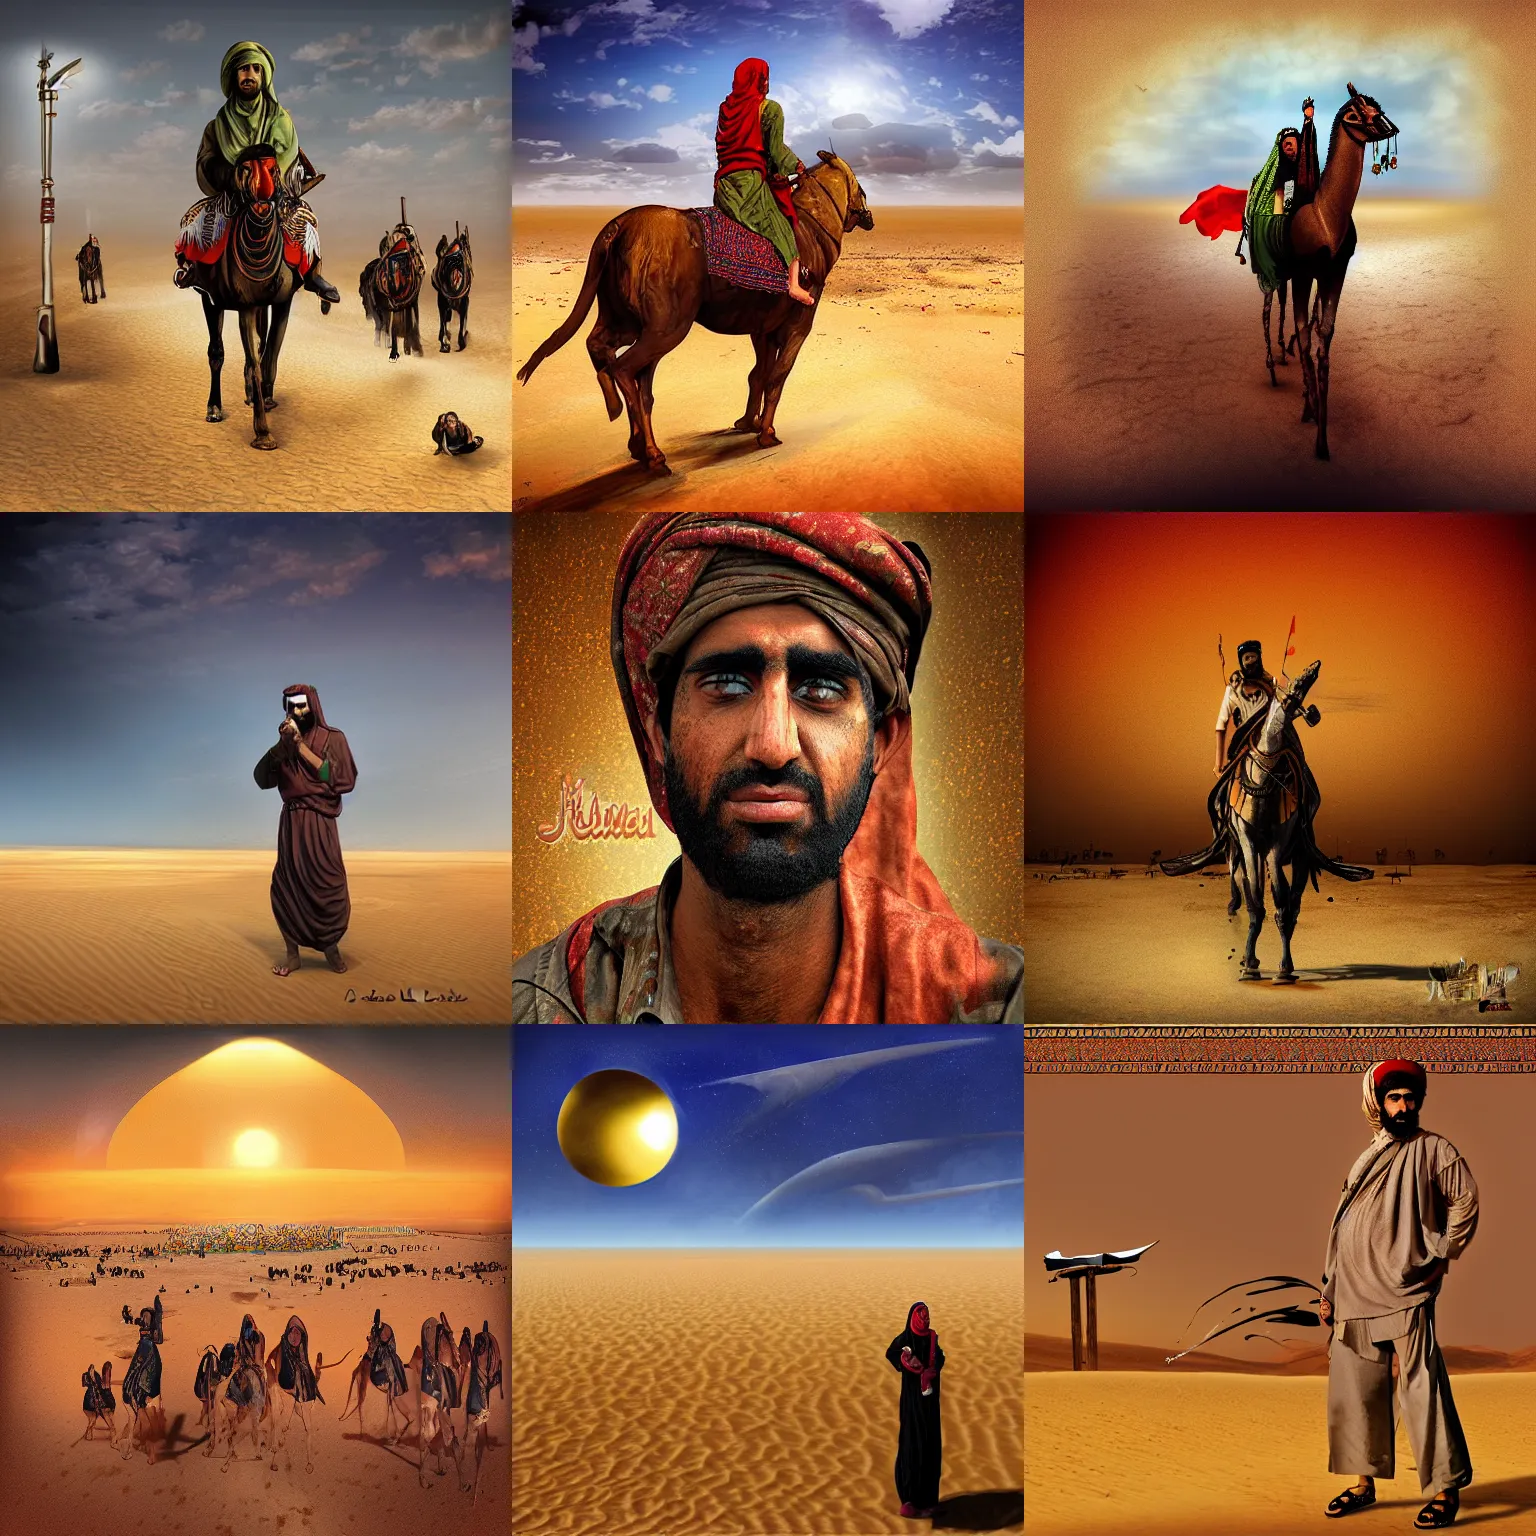 Prompt: Karbala Desert, Hussein at war, cruelty, realistic, digital art